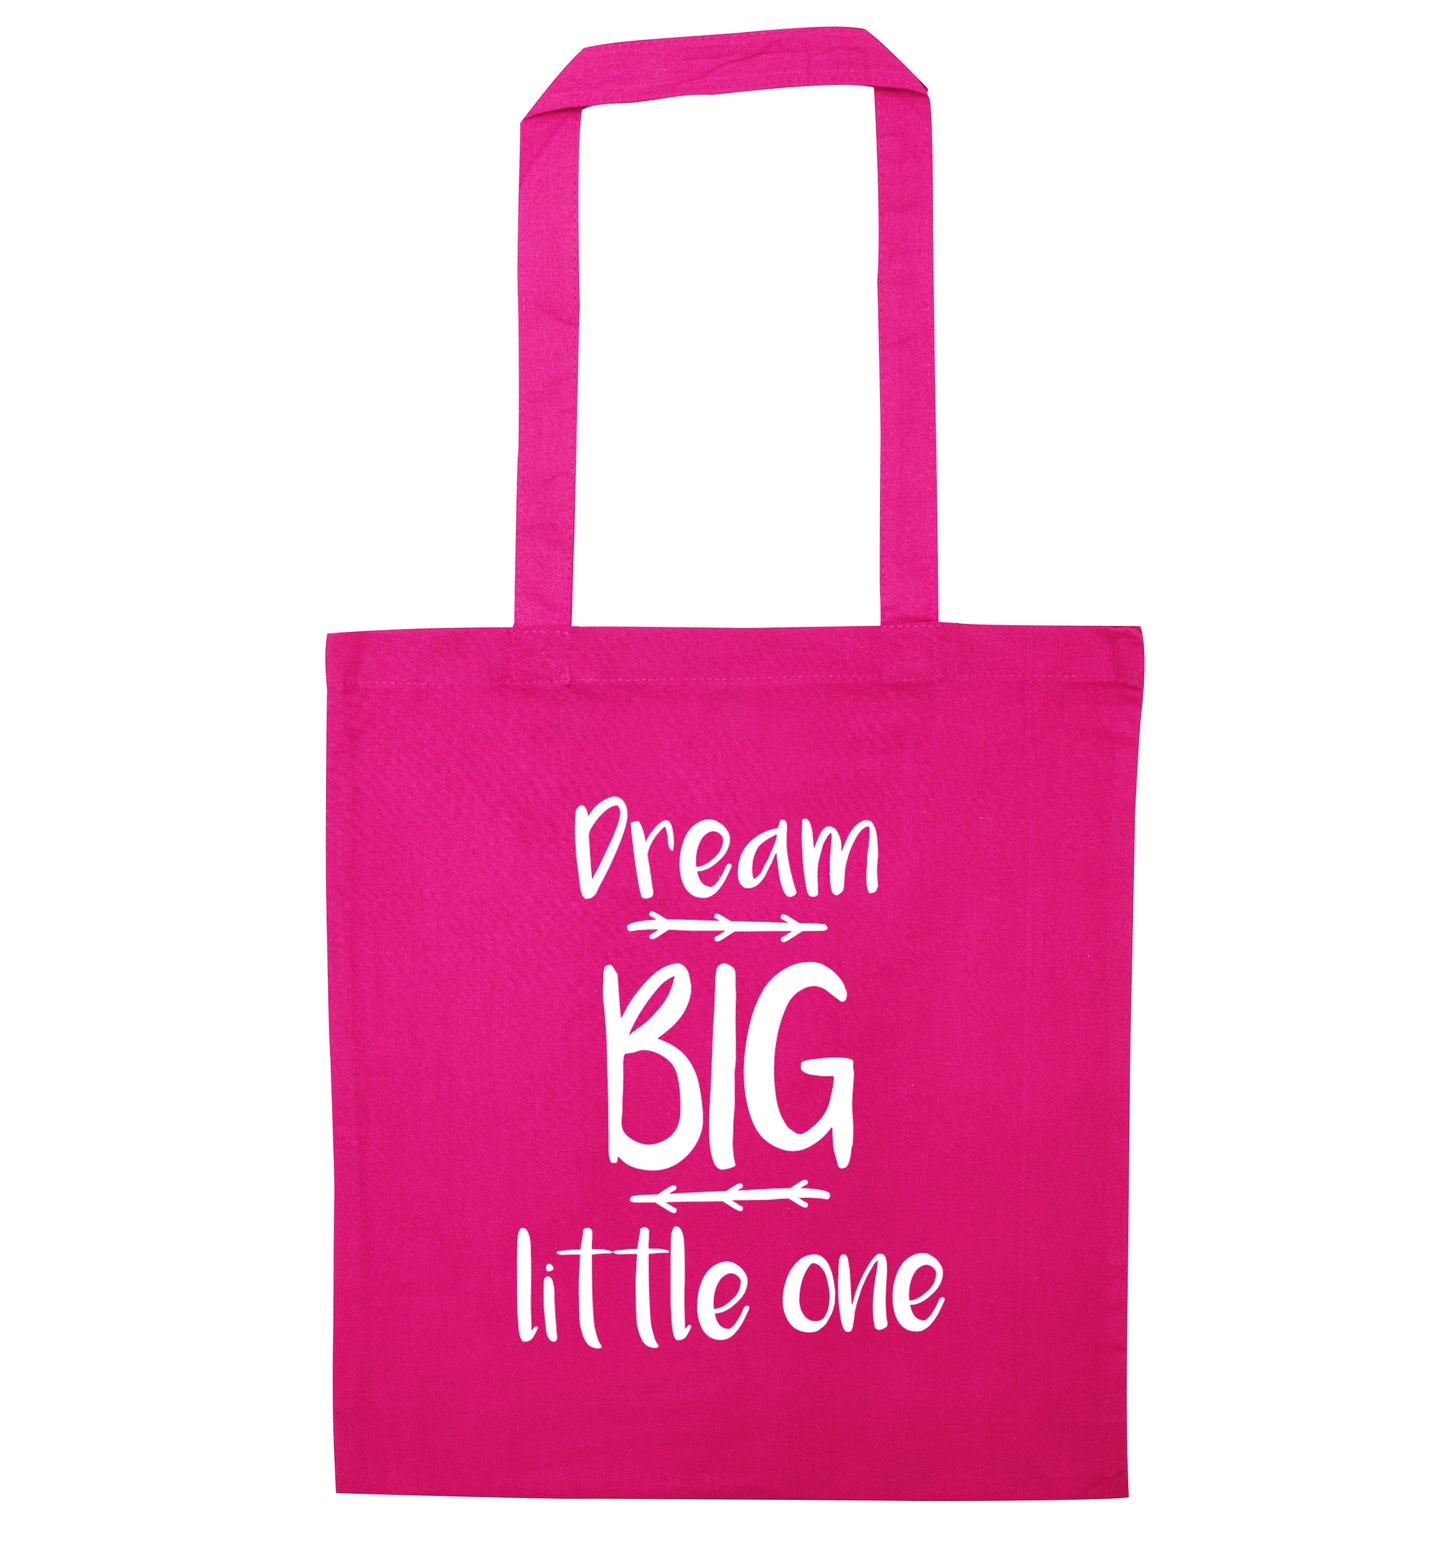 Dream big little one pink tote bag